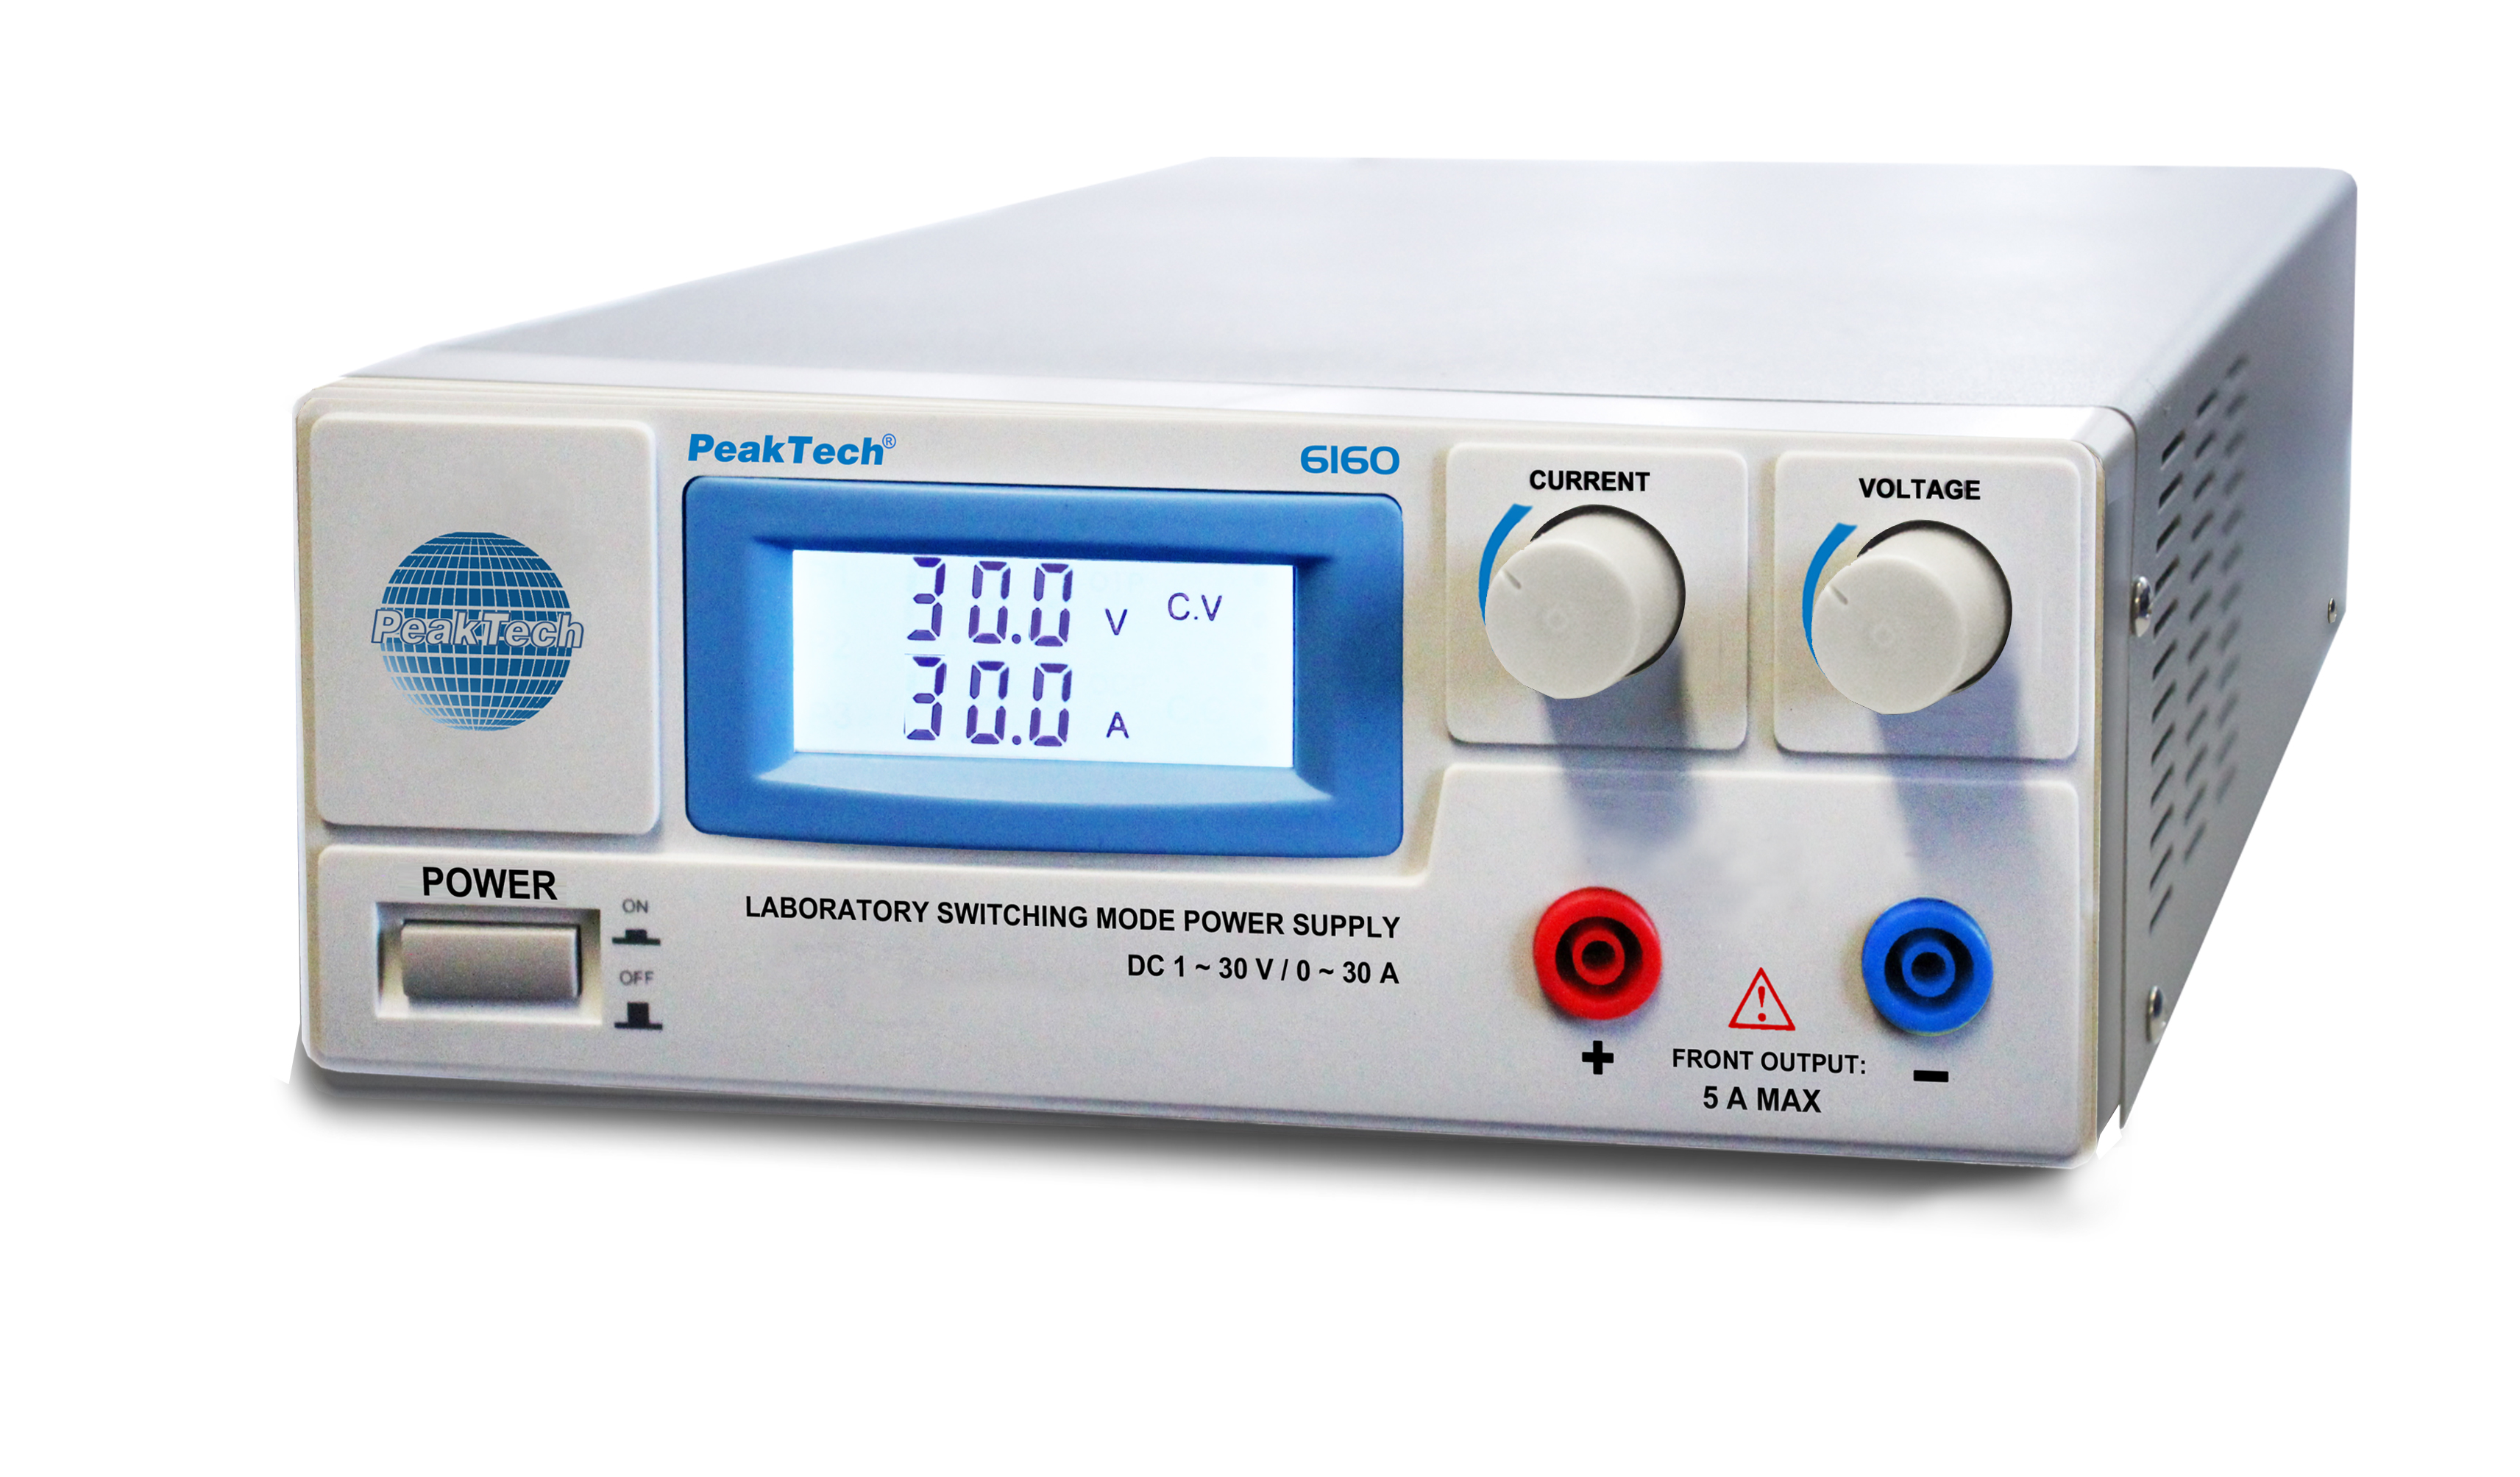 «PeakTech® P 6160» Laboratory Switching Mode Power Supply